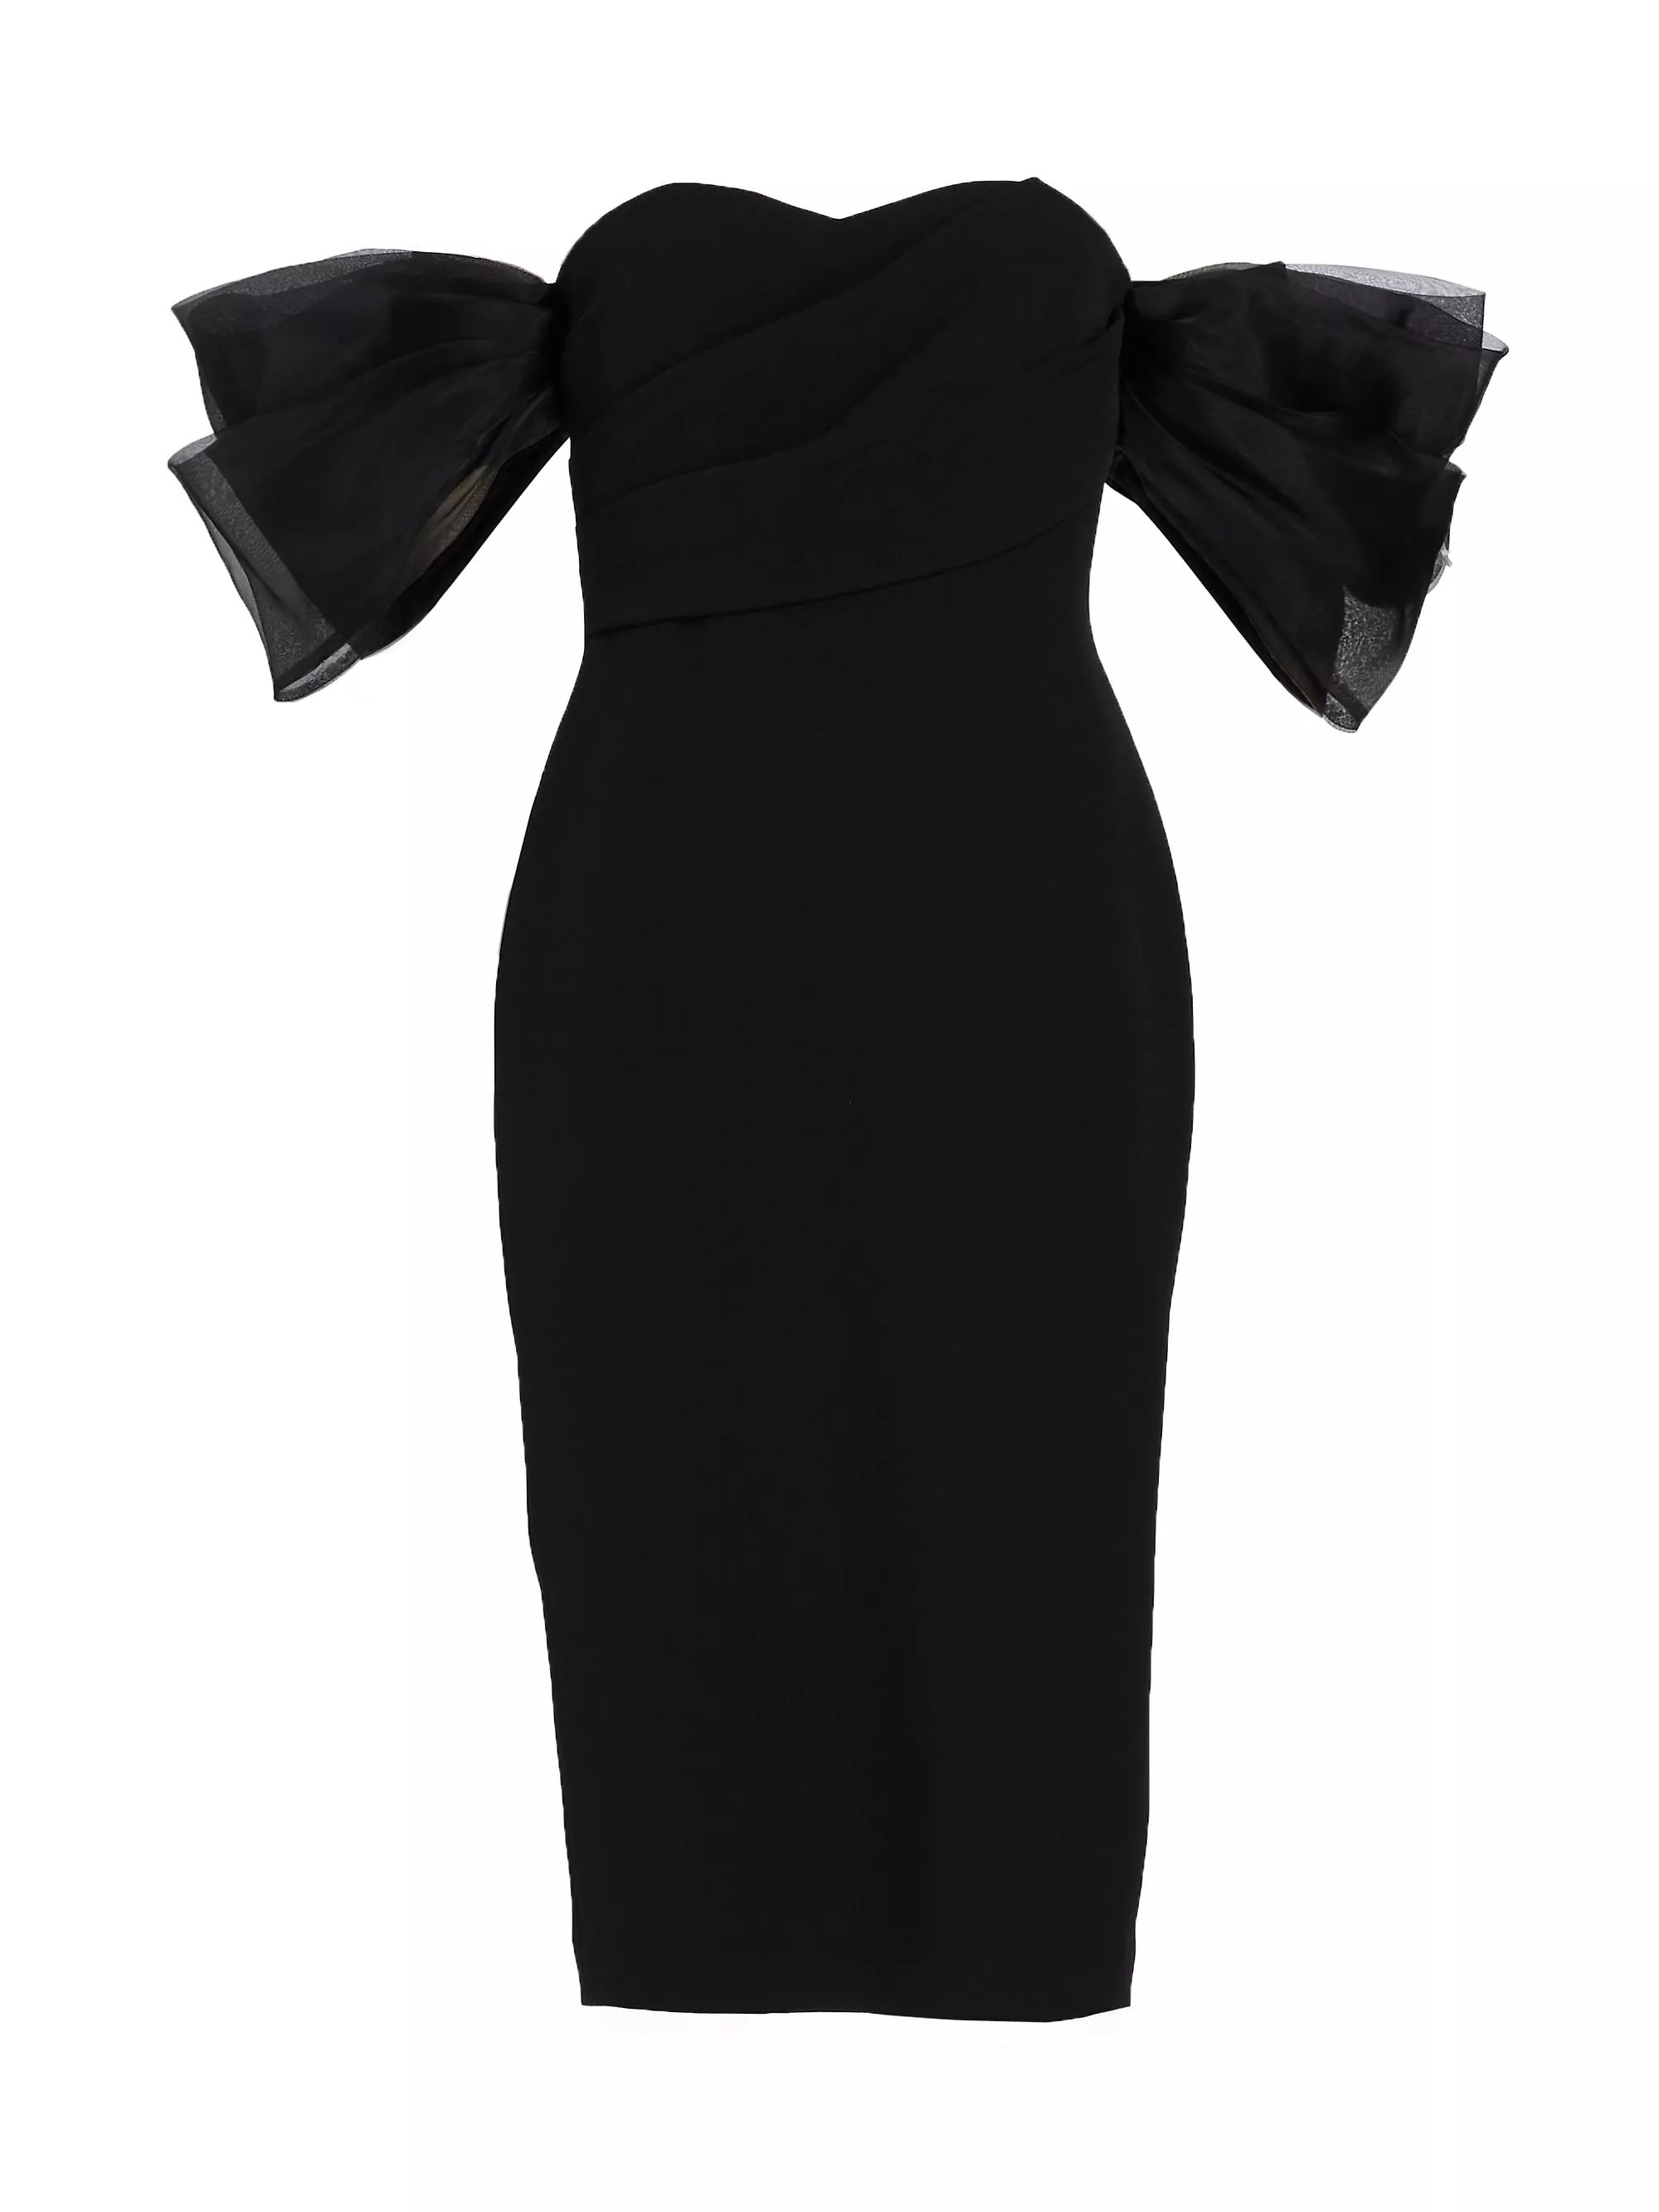 BlackAll CocktailBadgley MischkaOrganza Puff-Sleeve Cocktail Midi-Dress$595
            
        ... | Saks Fifth Avenue